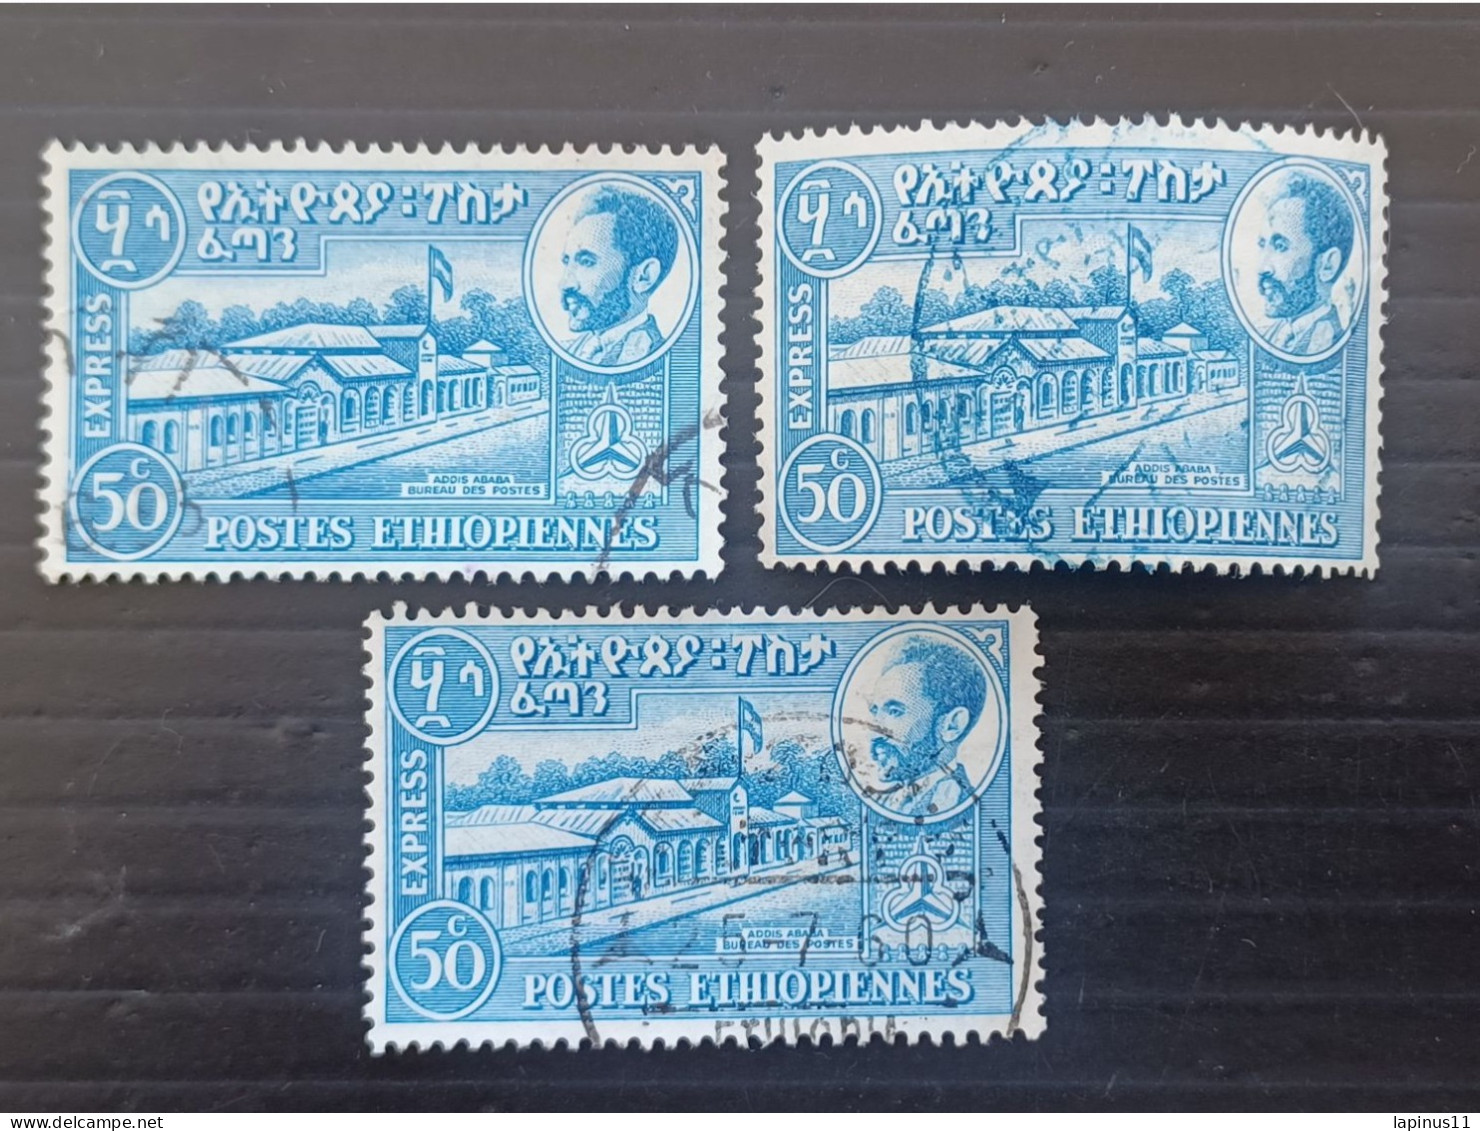 ETIOPIA 1954 EXPRESS STAMPS YVERT N 4 EXCEPTIONAL "A" WATERMARK POSITION ERROR INVERTED - Etiopía